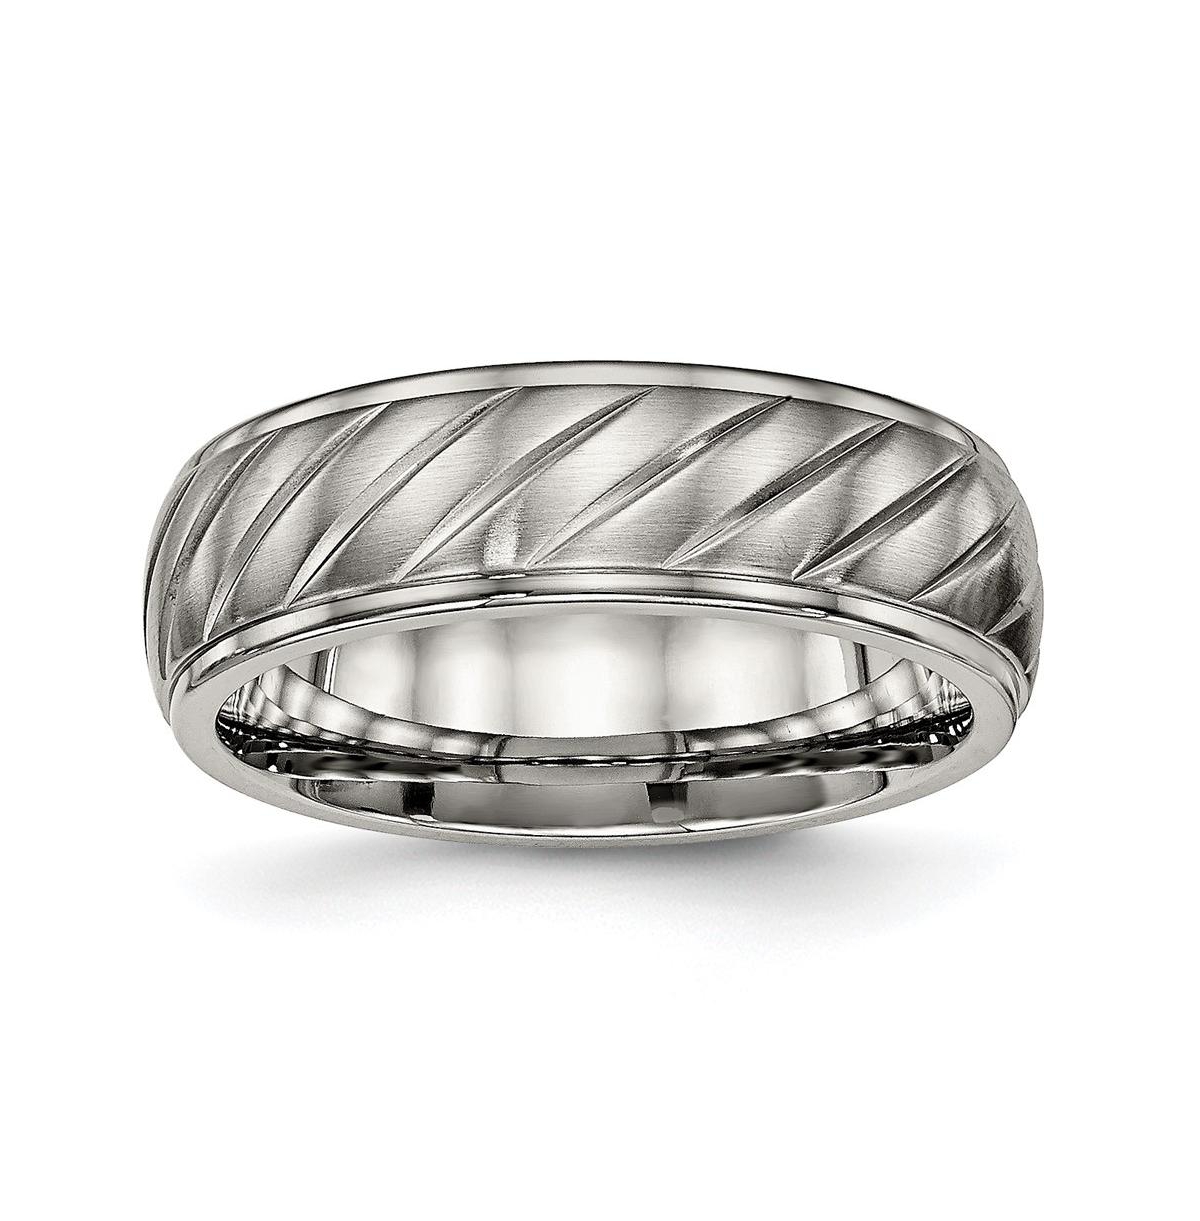 Titanium Brushed and Polished Grooved Wedding Band Ring - Grey